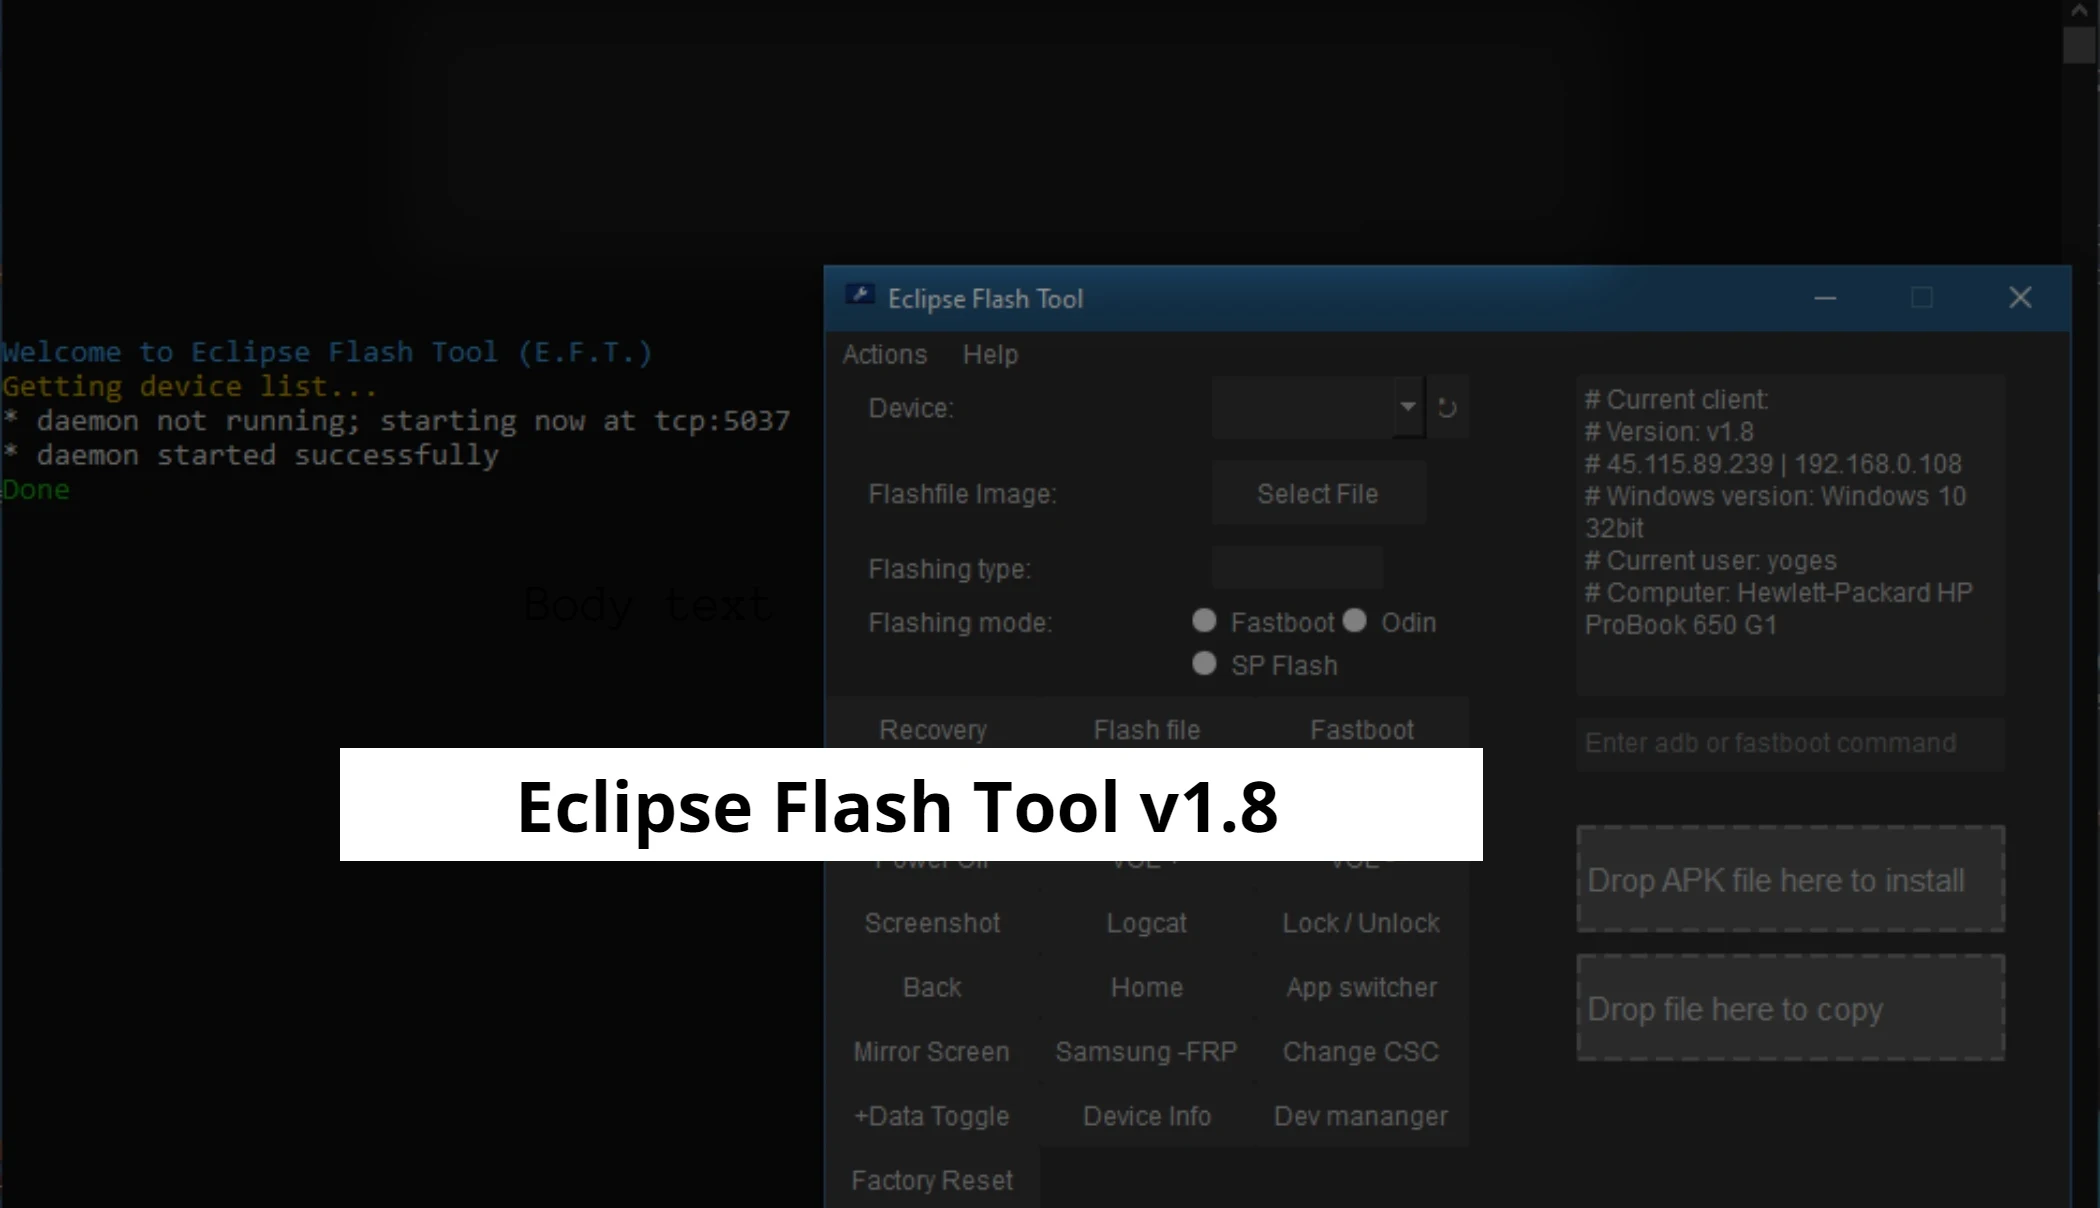 Eclipse Flash Tool v1.8